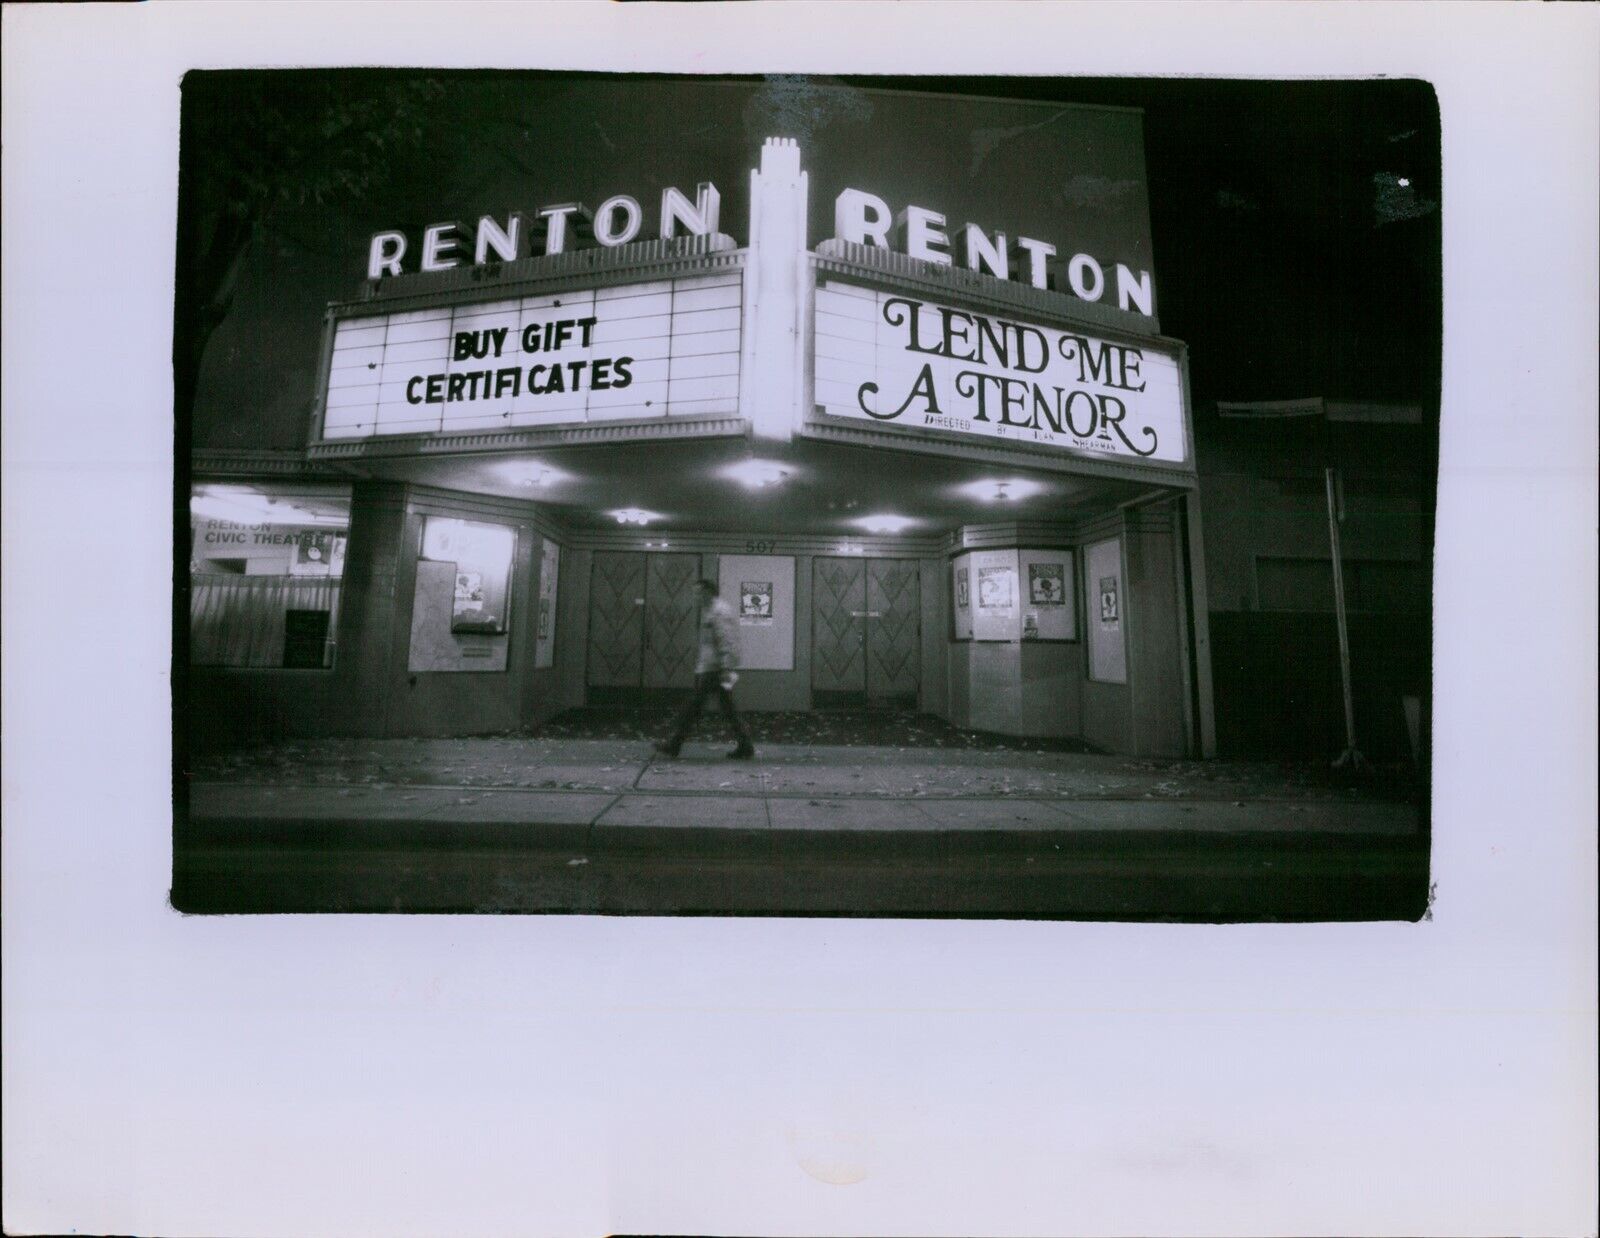 LG855 1993 Original Photo RENTON CIVIC THEATRE Downtown Landmark Lend a Tenor